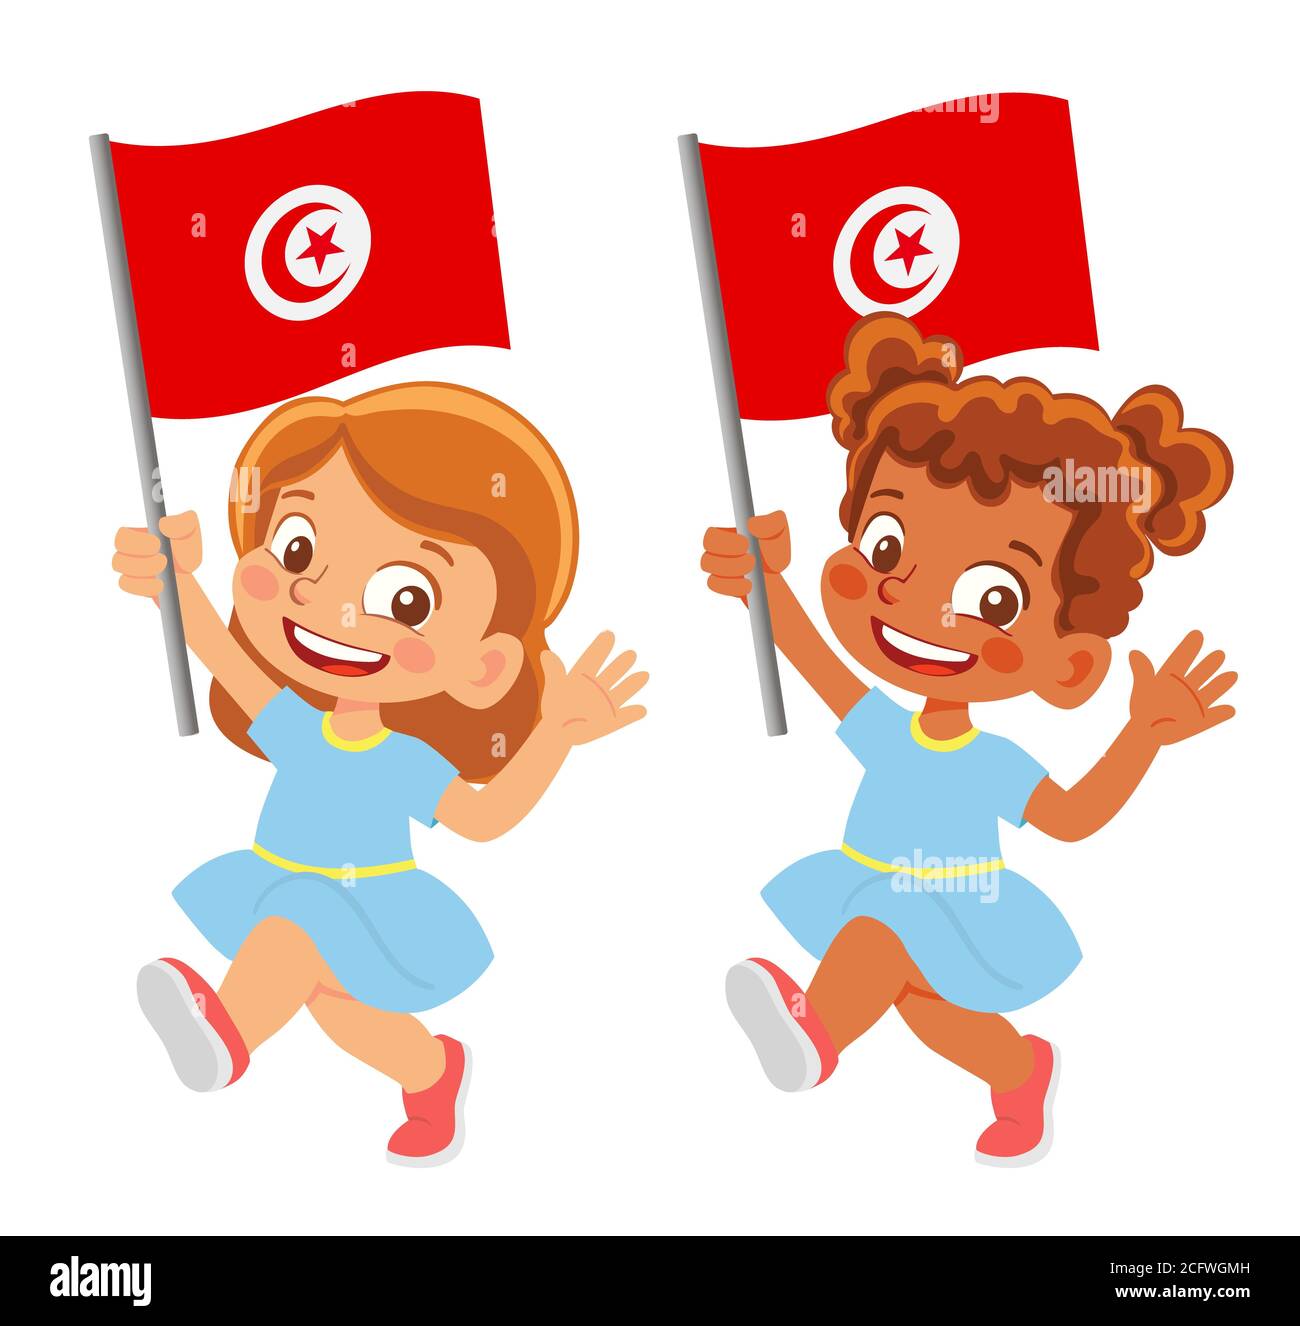 Tunisia flag in hand. Children holding flag. National flag of Tunisia Stock Photo